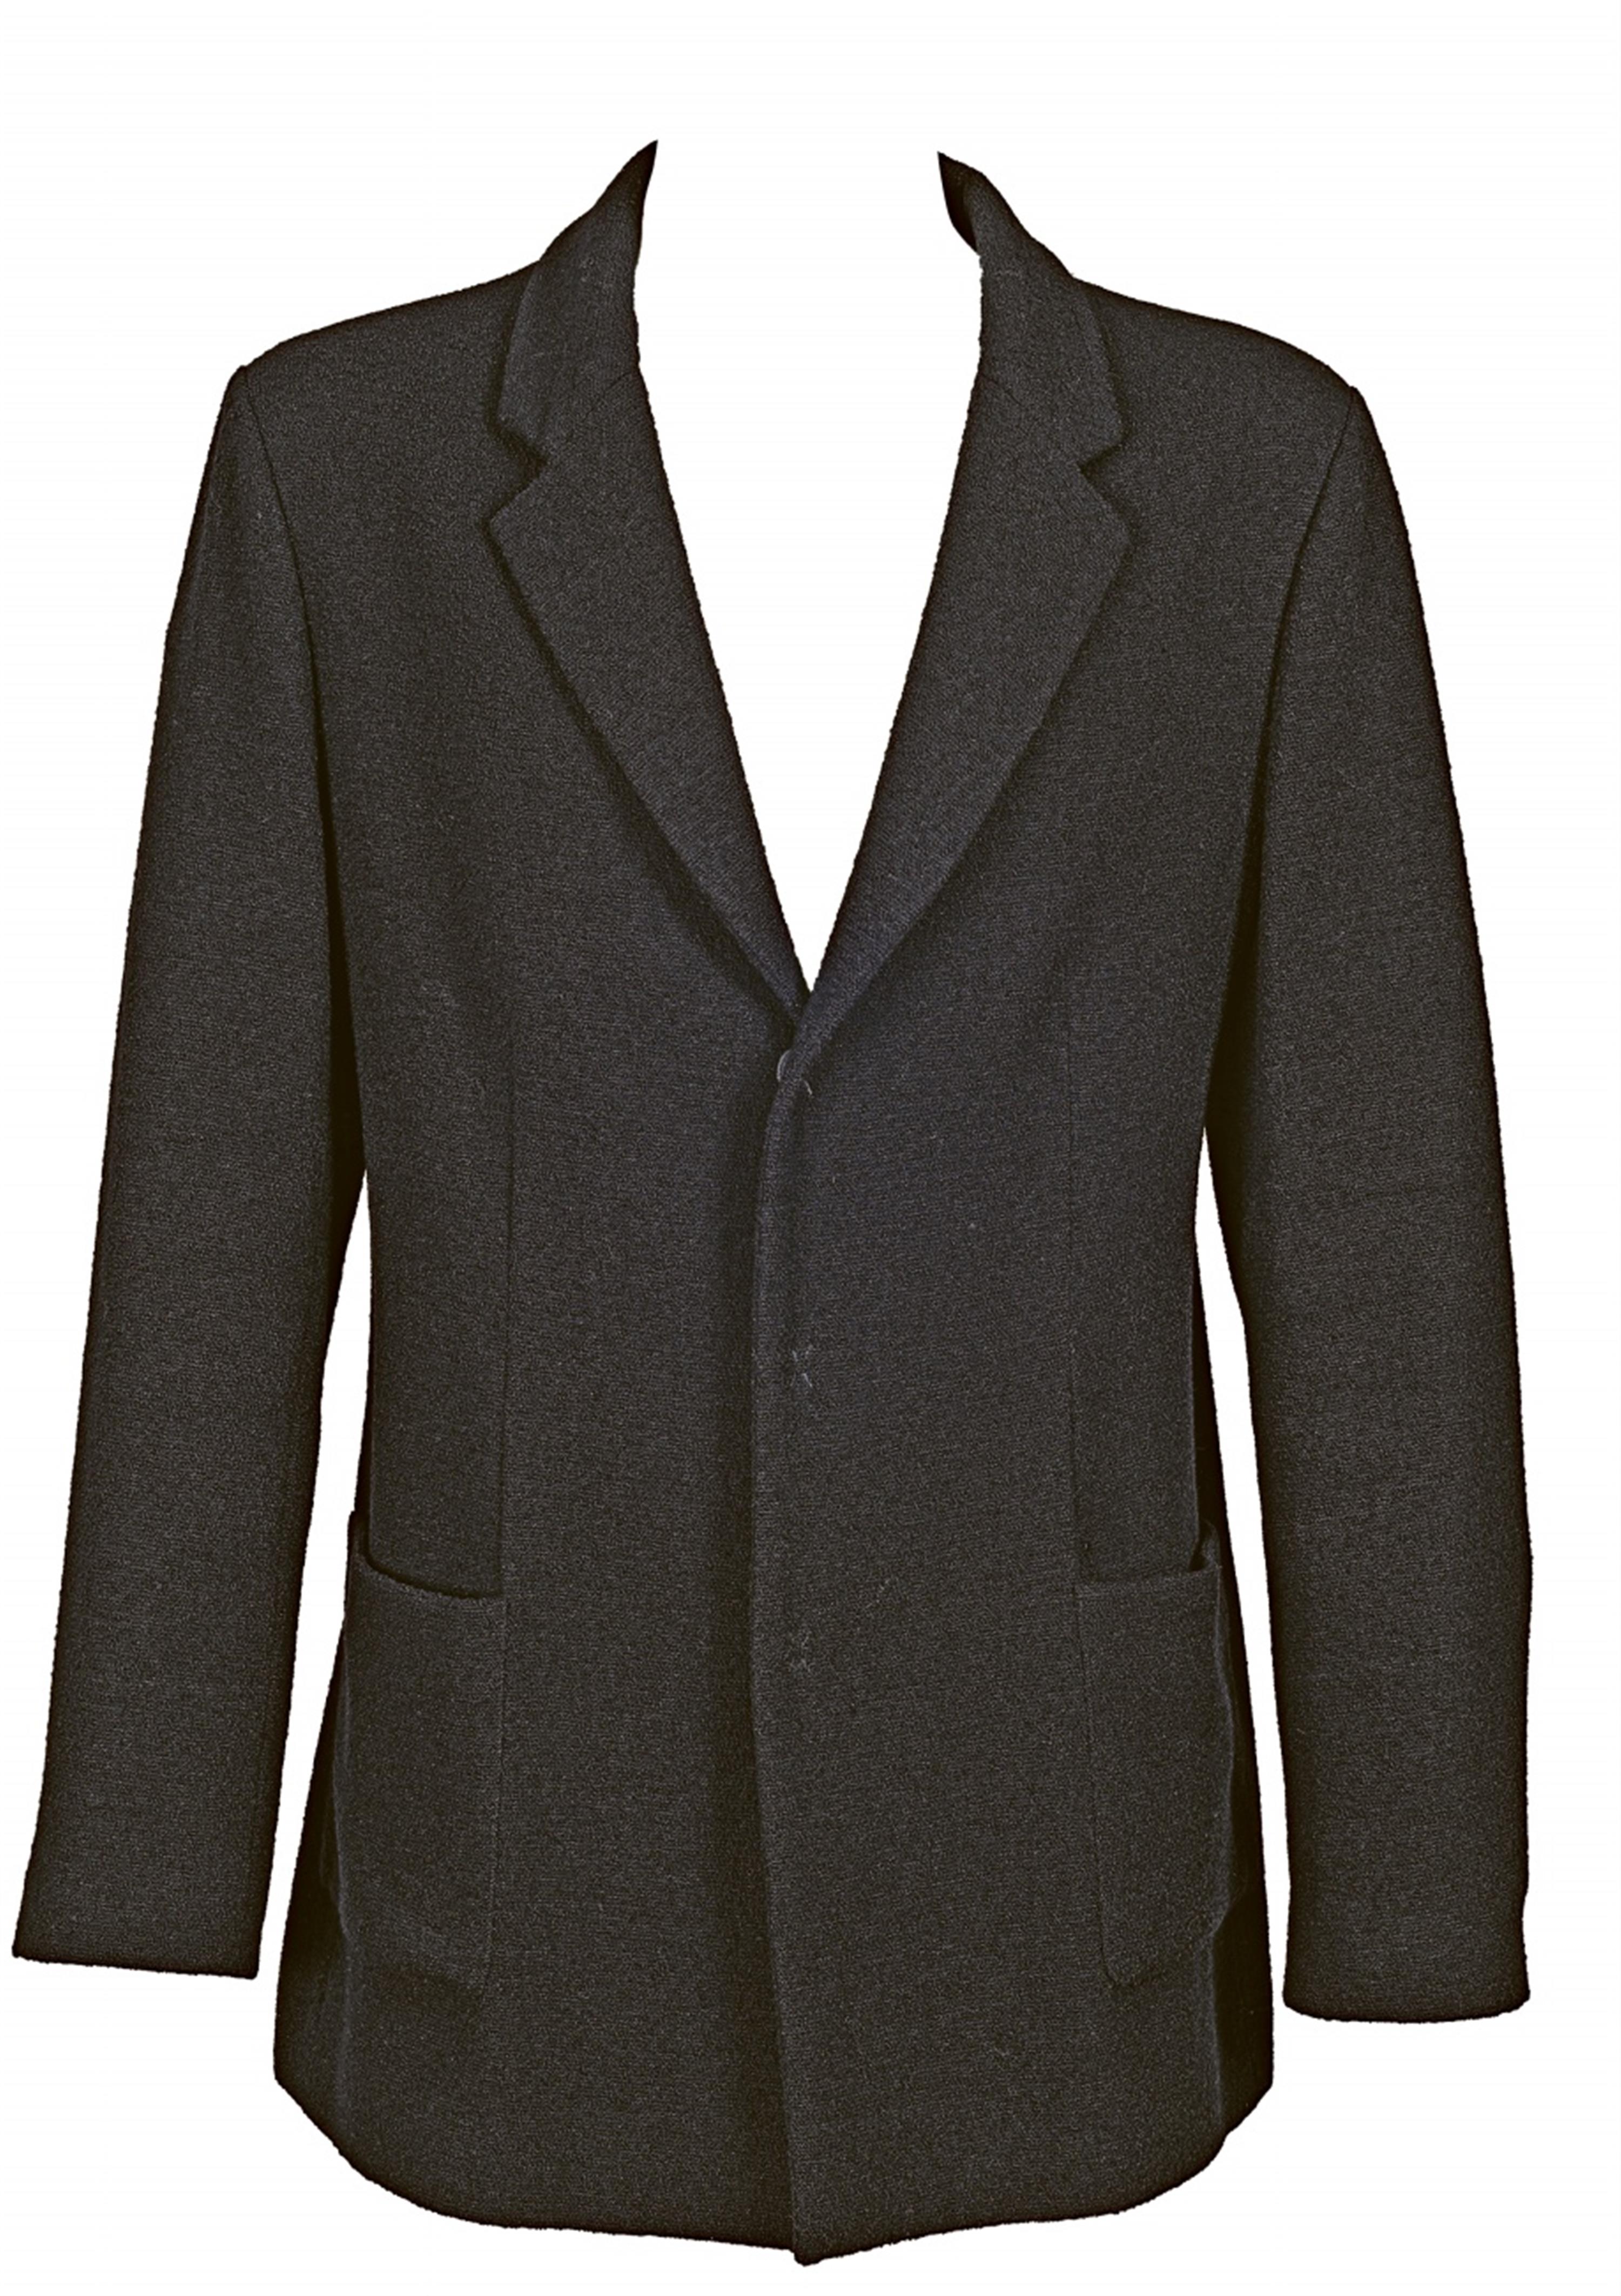 A Chanel men's blazer, Autumn 2008 - image-1